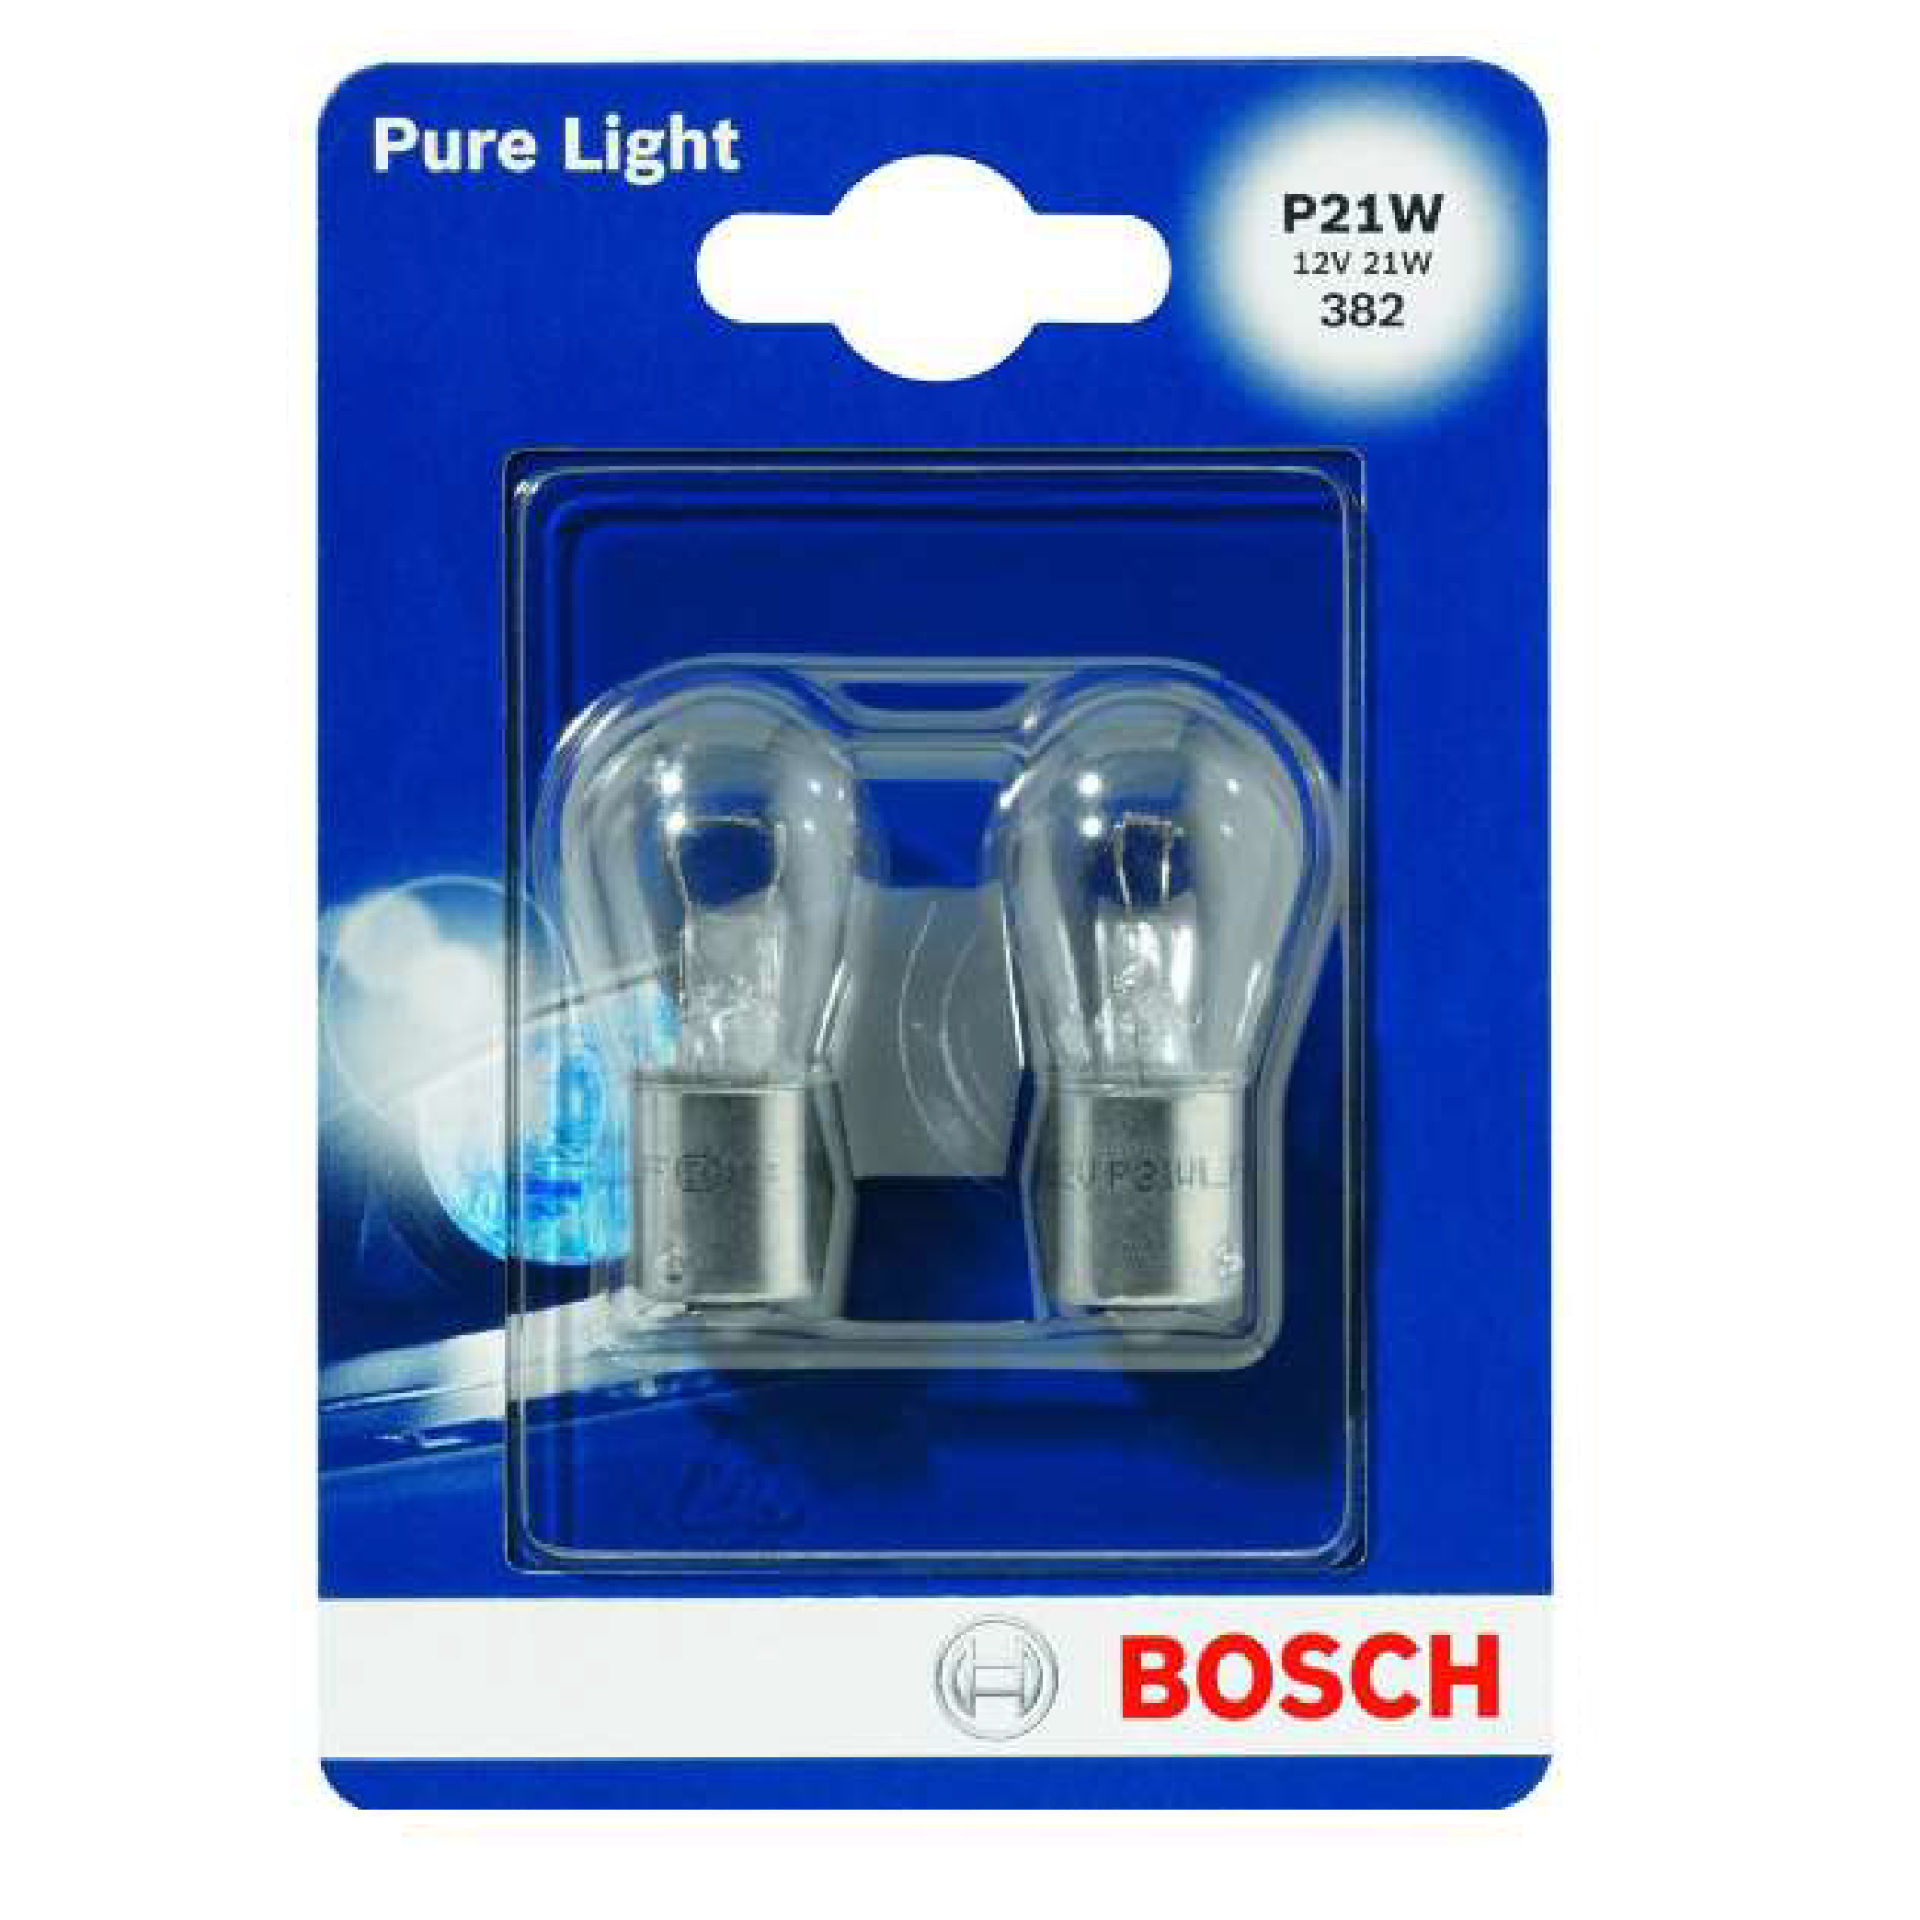 BOSCH 2 LAMP P21W 017Bosch